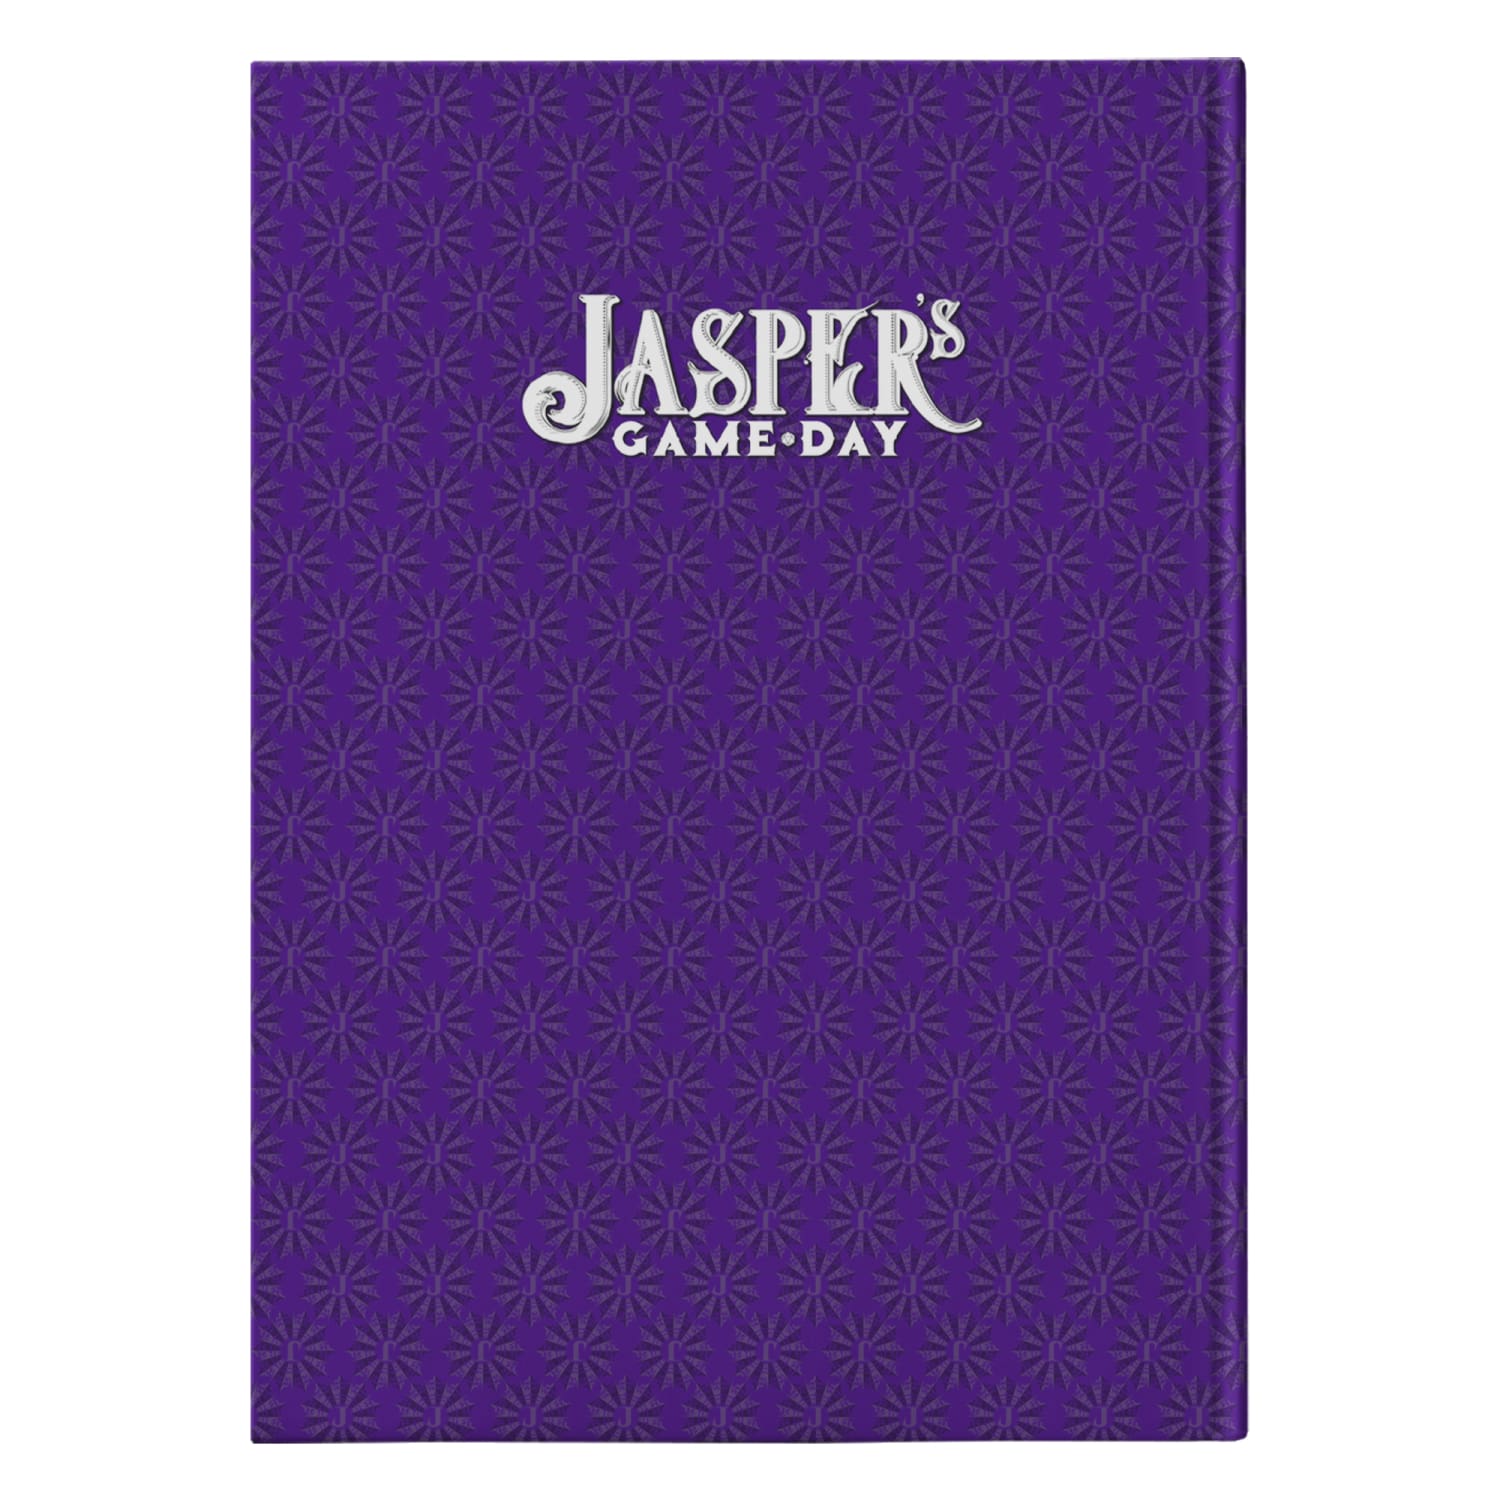 Jasper’s Game Day Hardcover Journal - Purple - Journals